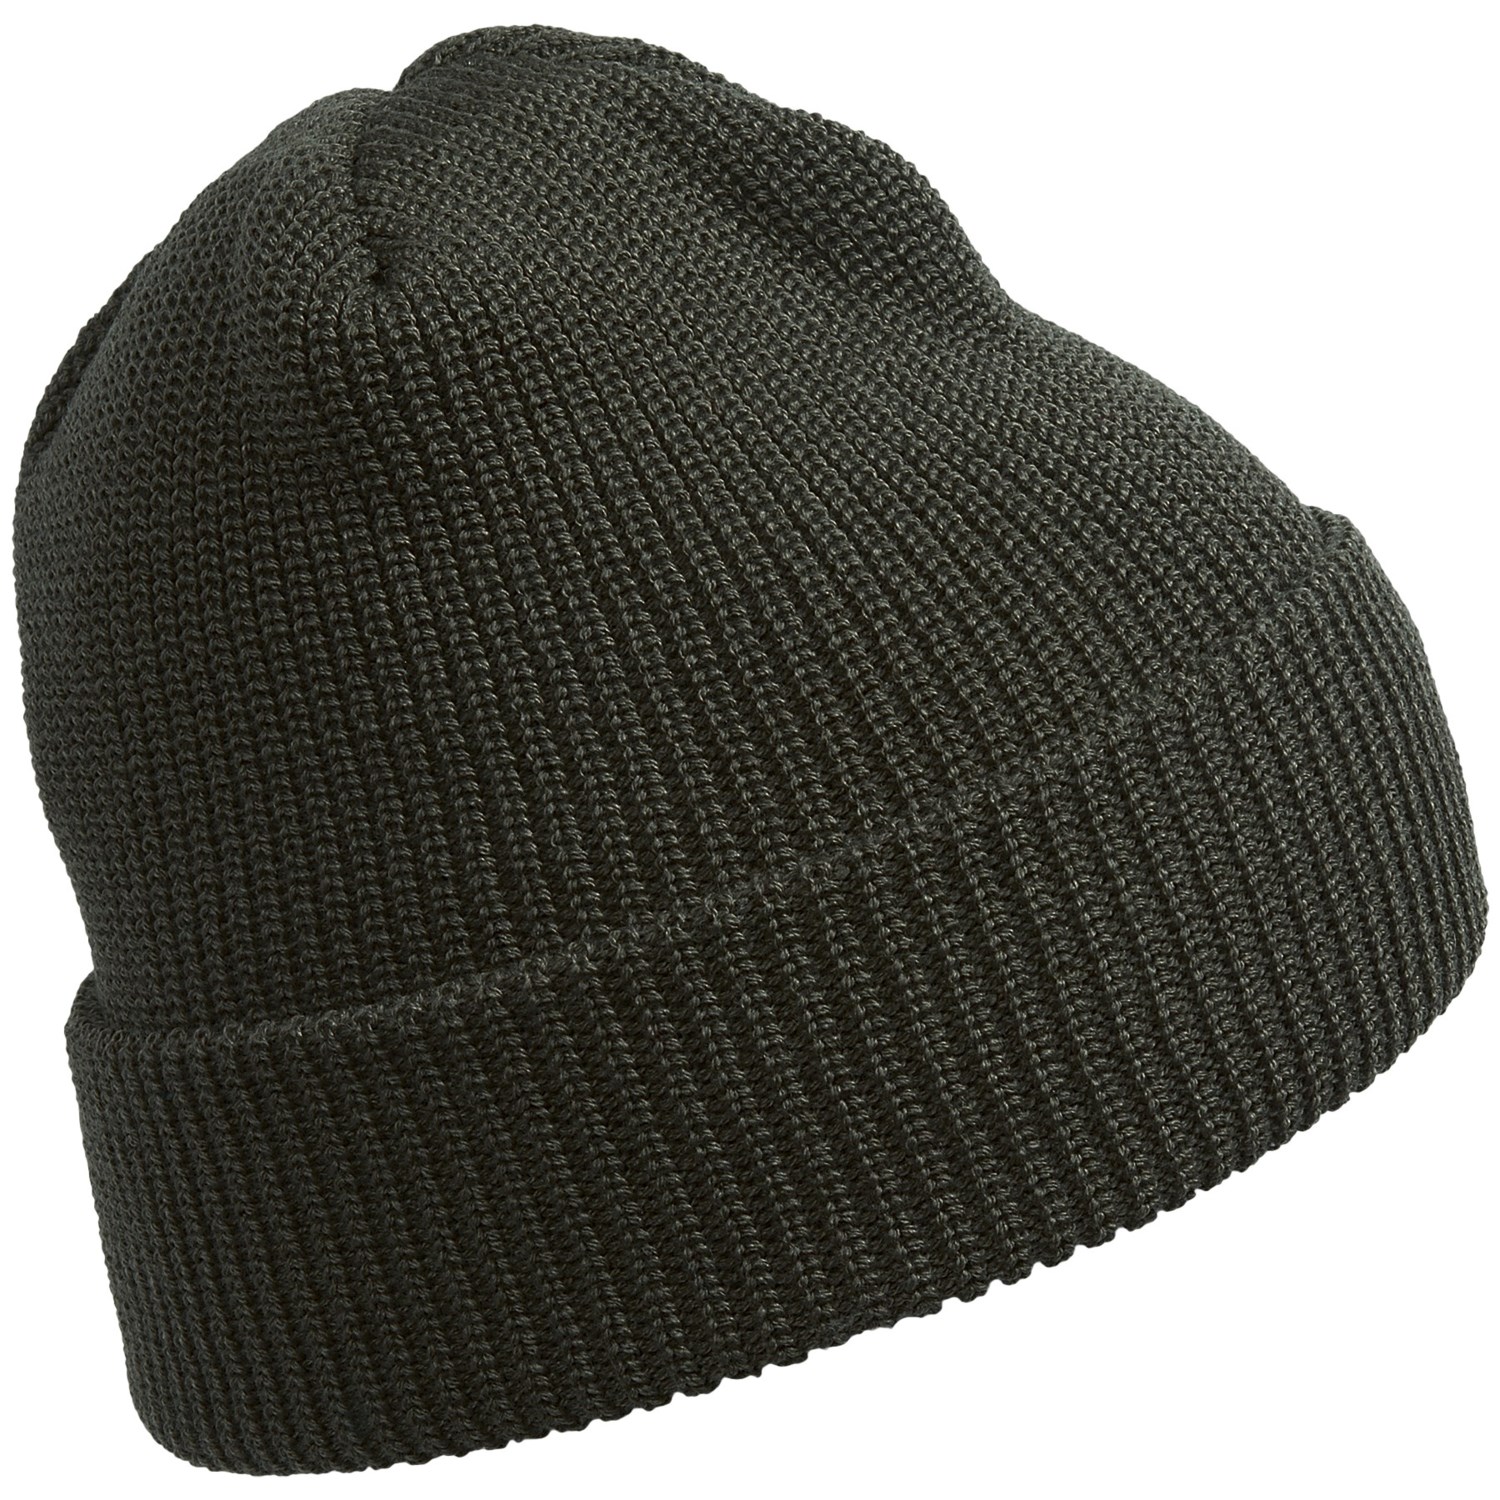 Wool Stocking Hats 43